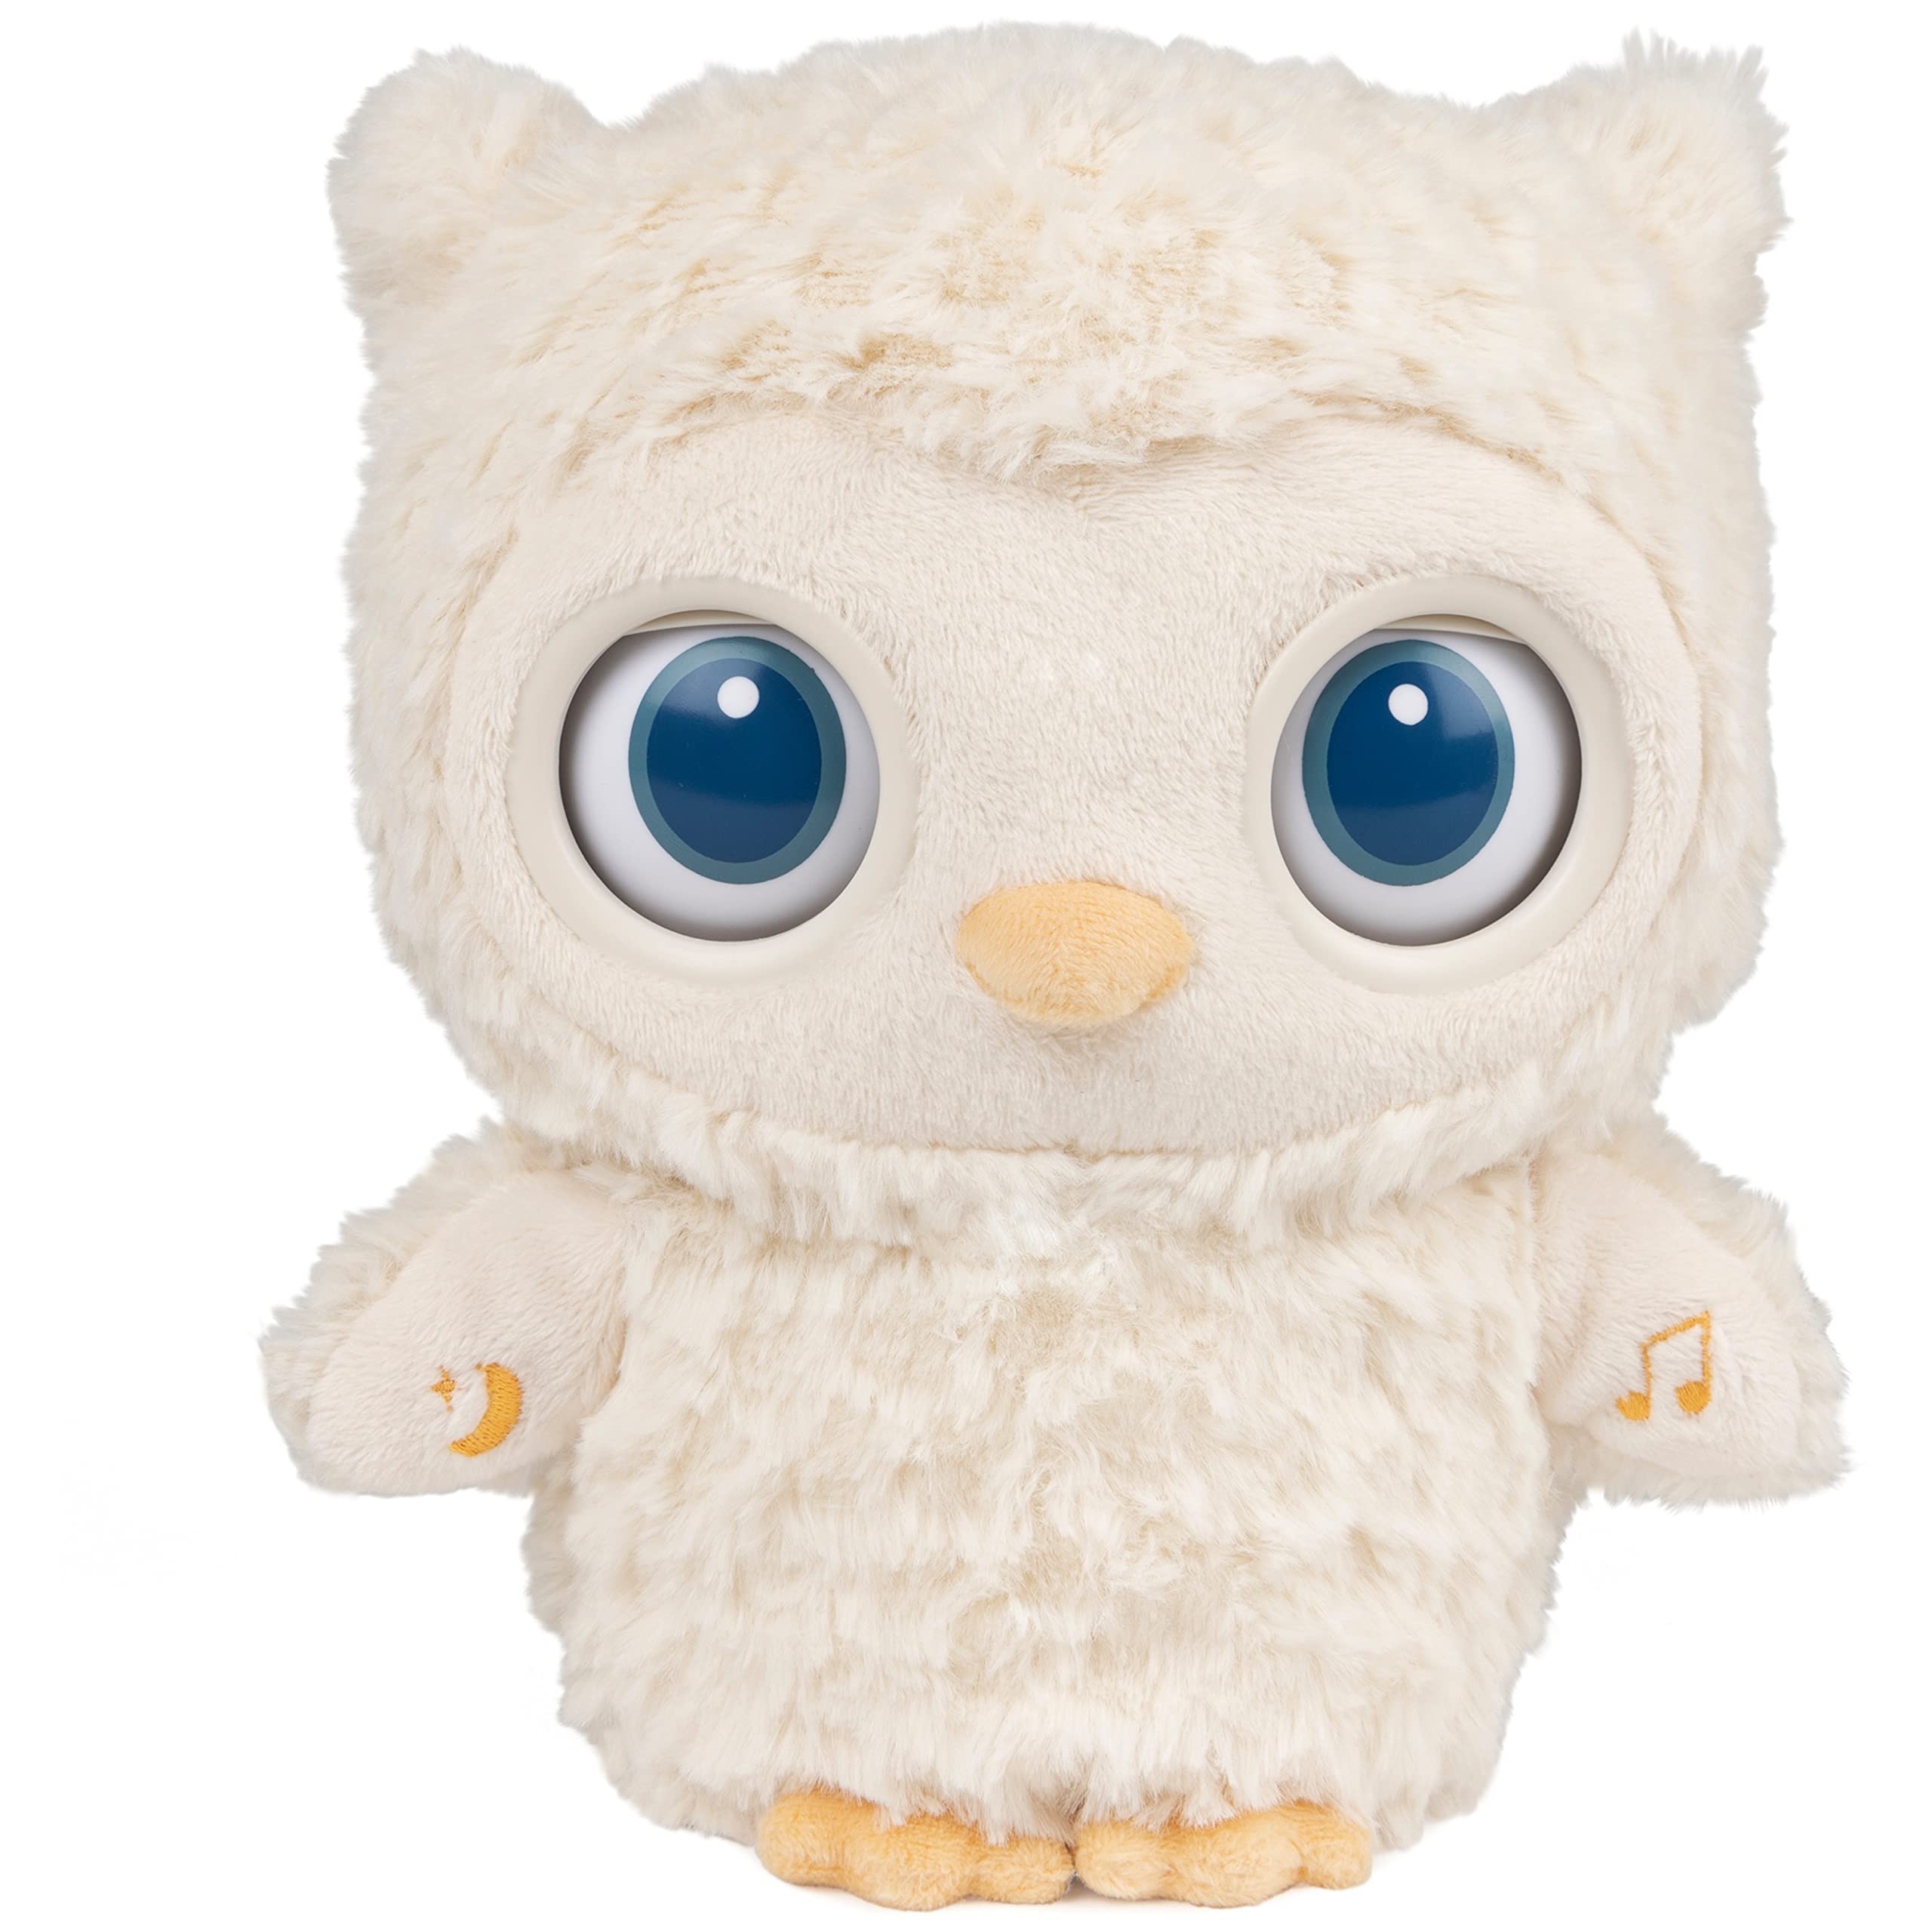 8" Gund Newborn Sleepy Eyes Owl Soother Stuffed Animal w/ Night Light & Sound Machine $17.90 + Free Shipping w/ Prime or on $25+